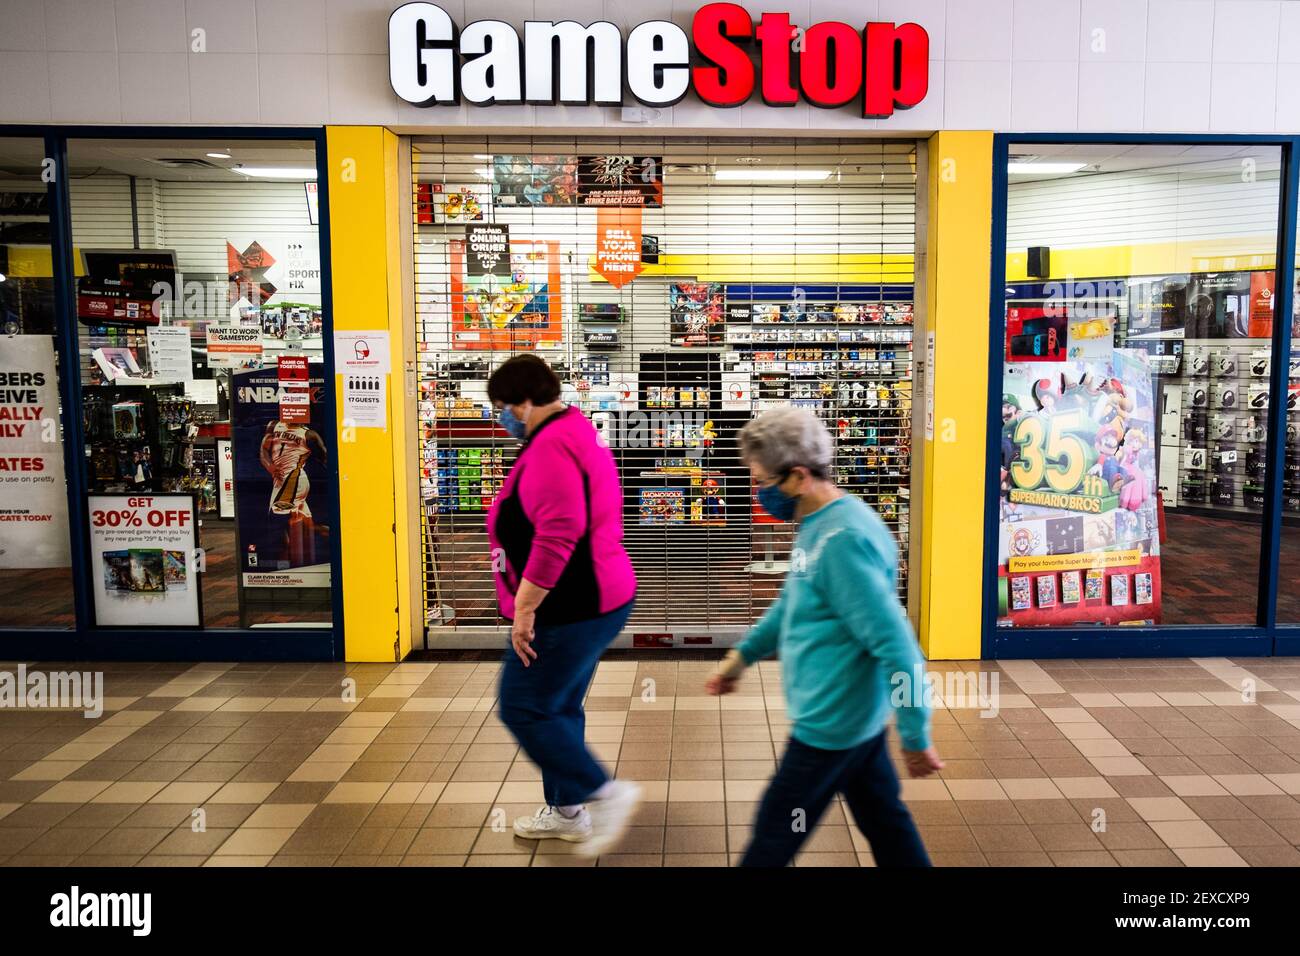 Mall Walkers flanieren an einem geschlossenen und verlassenen Game Stop Store in der Berlin Mall, Berlin, VT, USA vorbei. Stockfoto